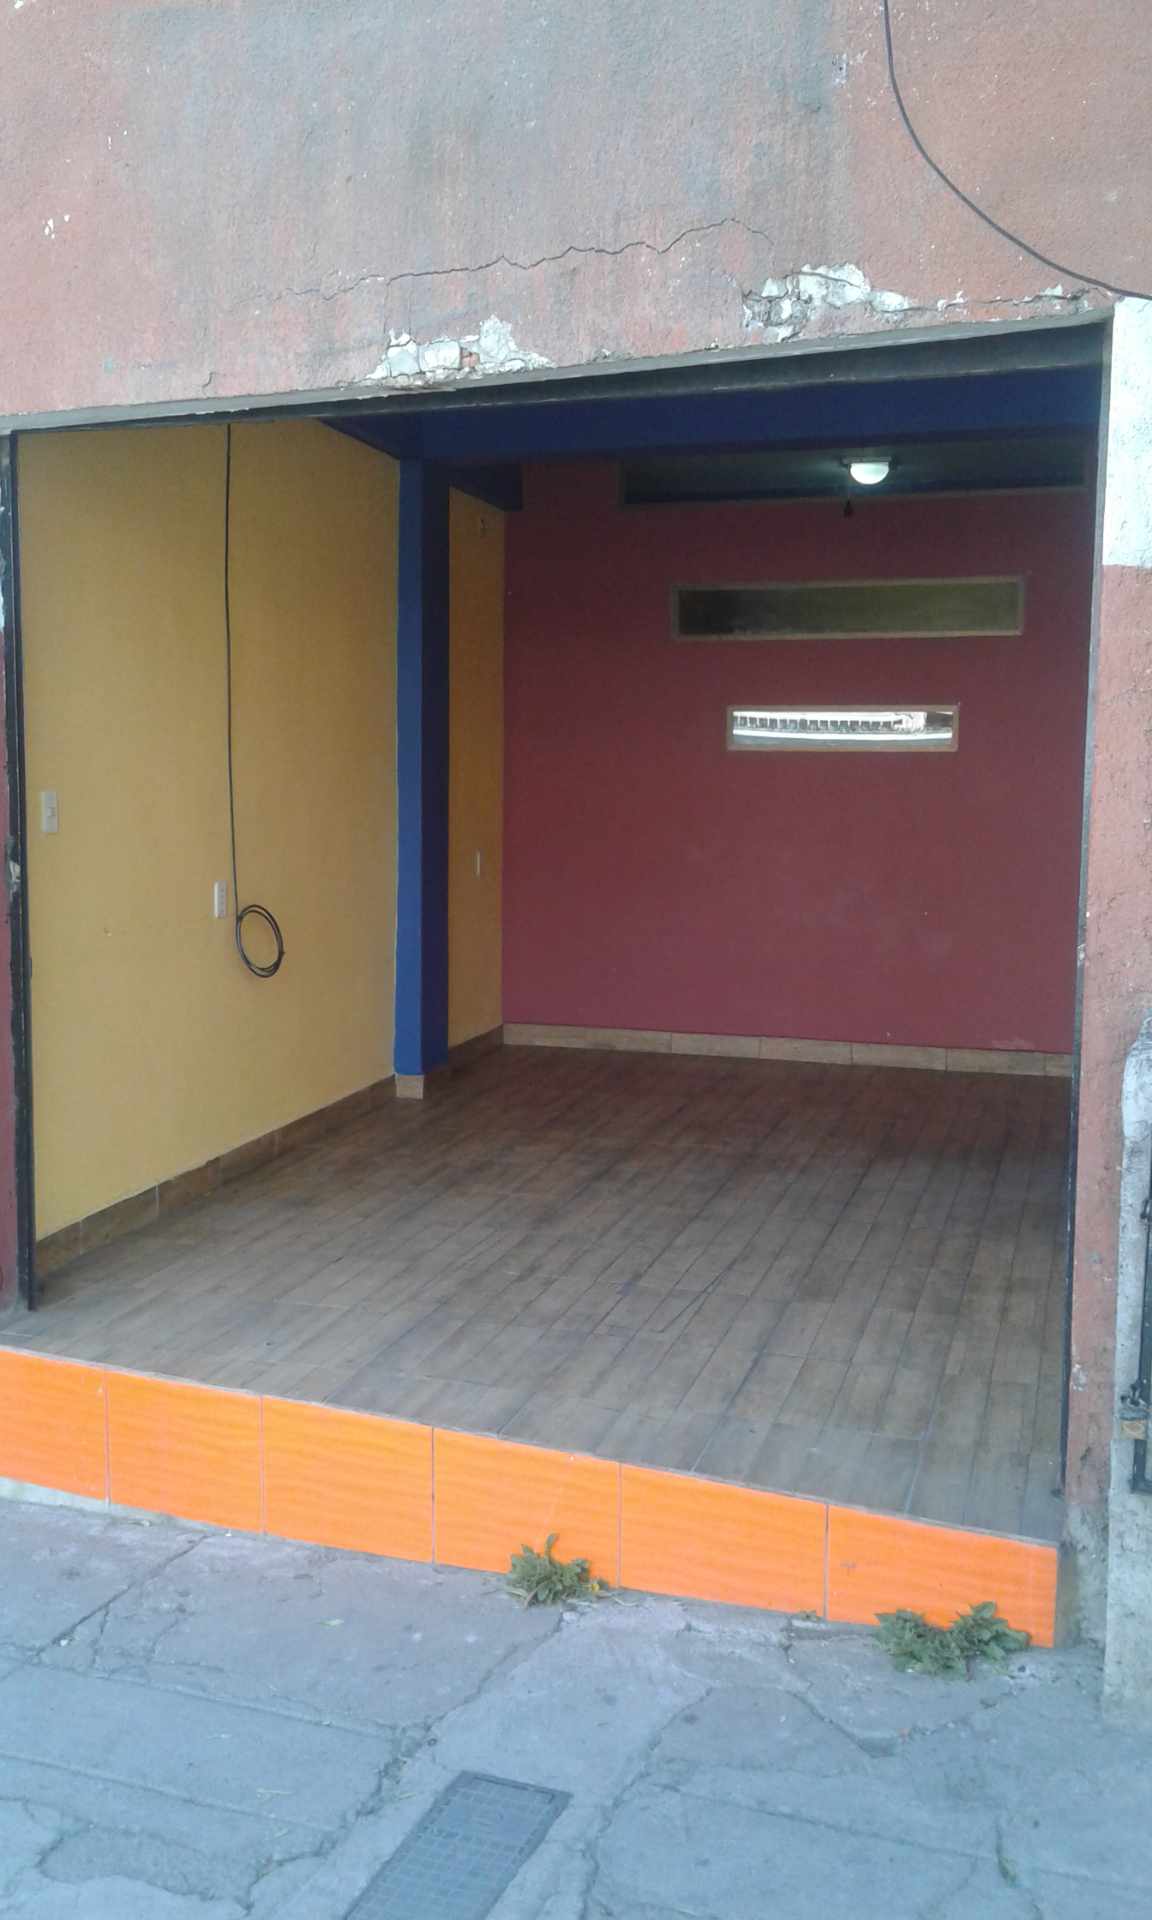 Oficina Calle Cuba No 1652A entre Carrasco y Pasoskanki zona de Miraflores La Paz - Bolivia (OFERTABLE y entrega inmediata) Foto 2